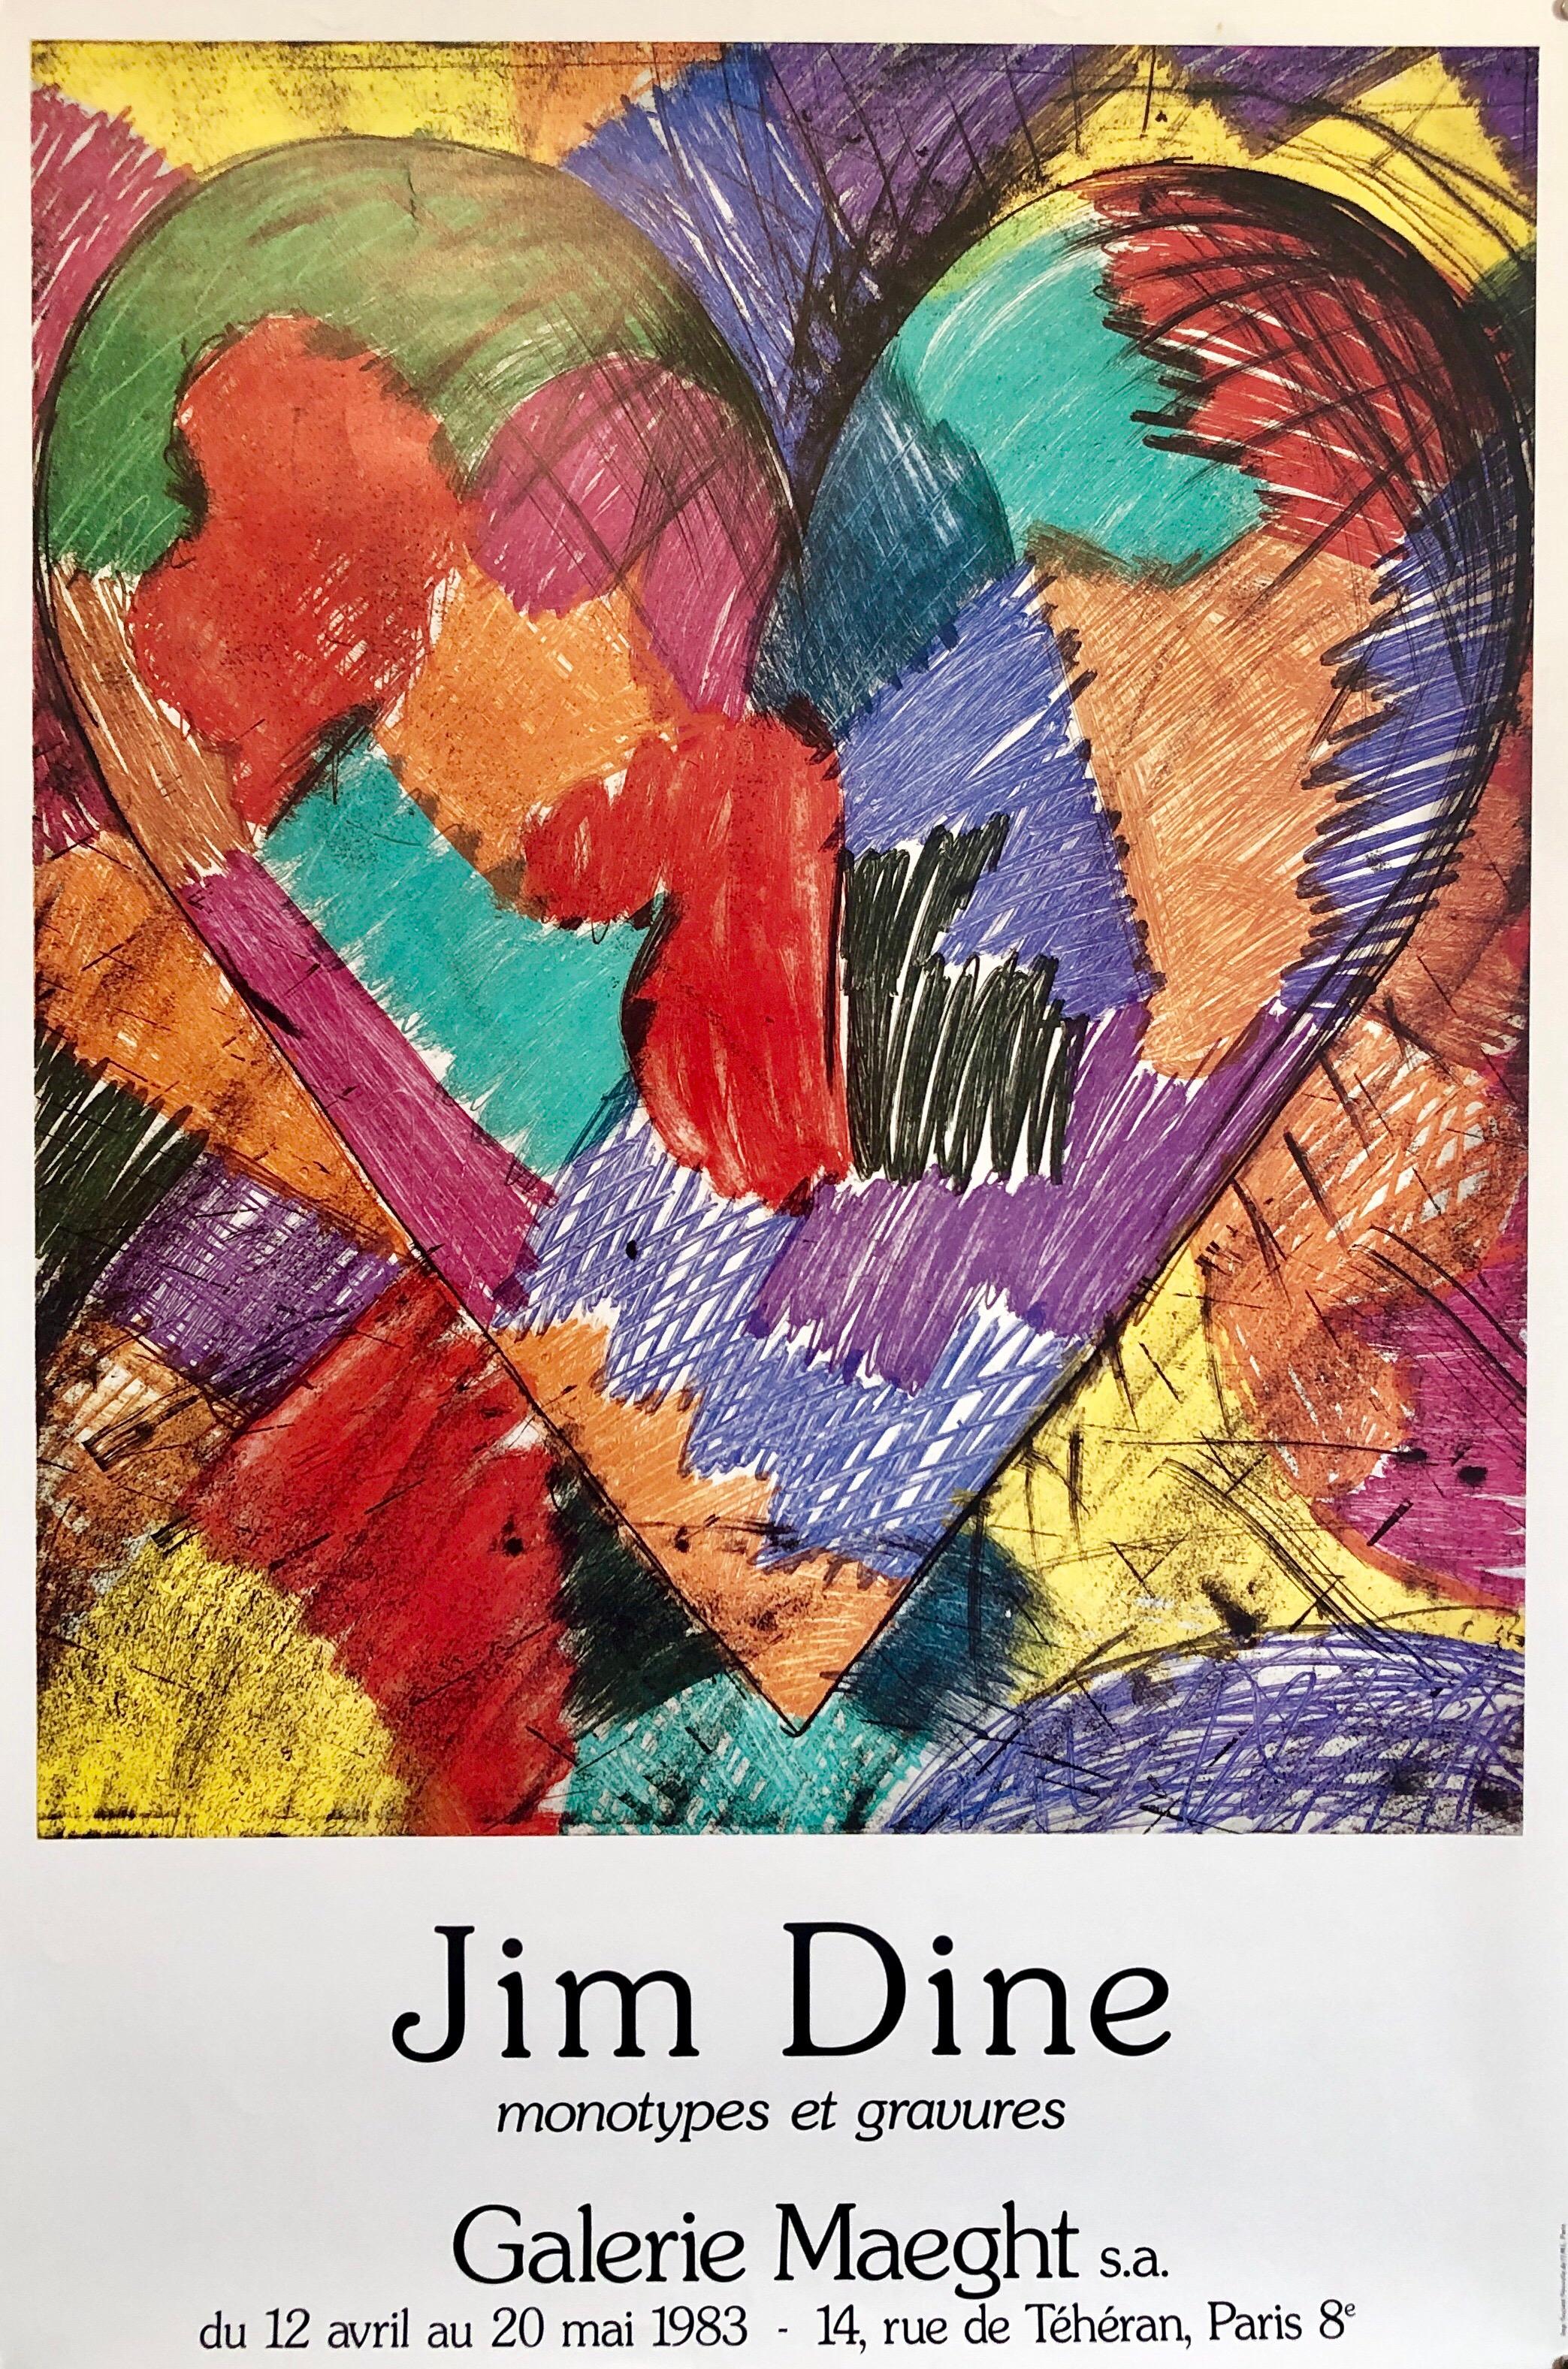  Rainbow Quilt Heart Pop Art Vintage Offset Lithograph Poster Jim Dine, Maeght